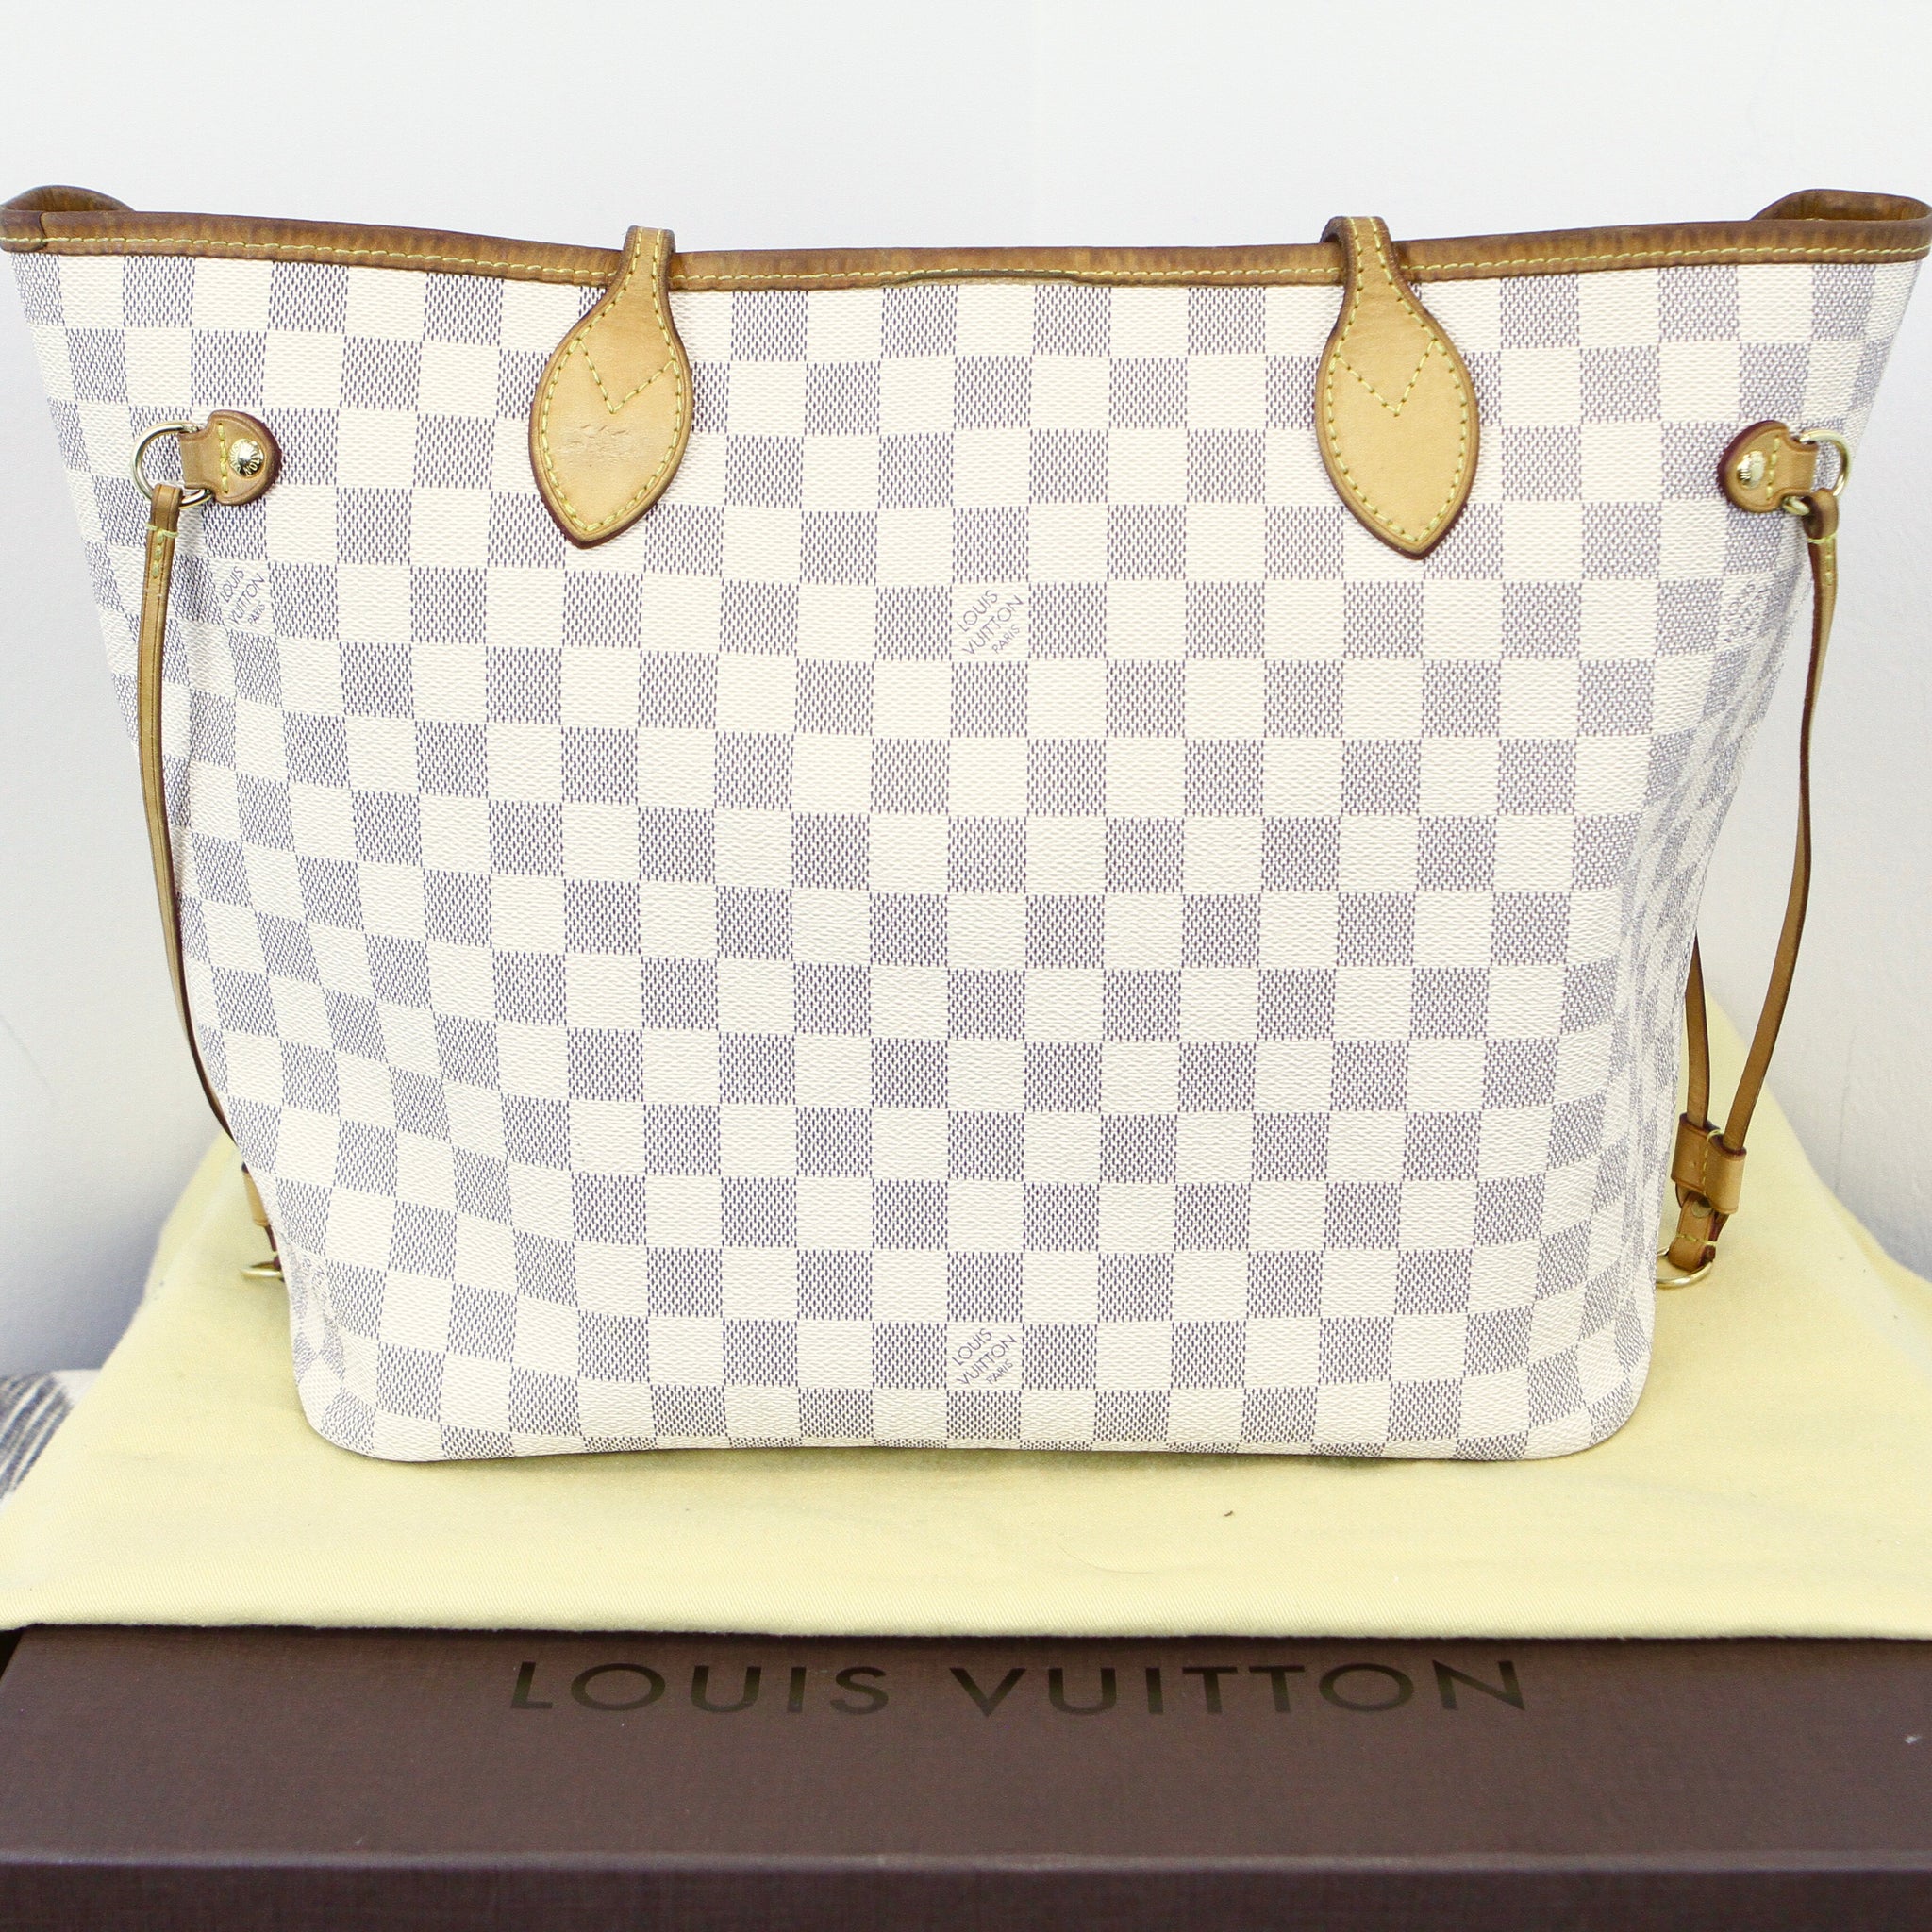 Louis Vuitton Neverfull MM Damier Azur $1,300 Shop on theposhvault